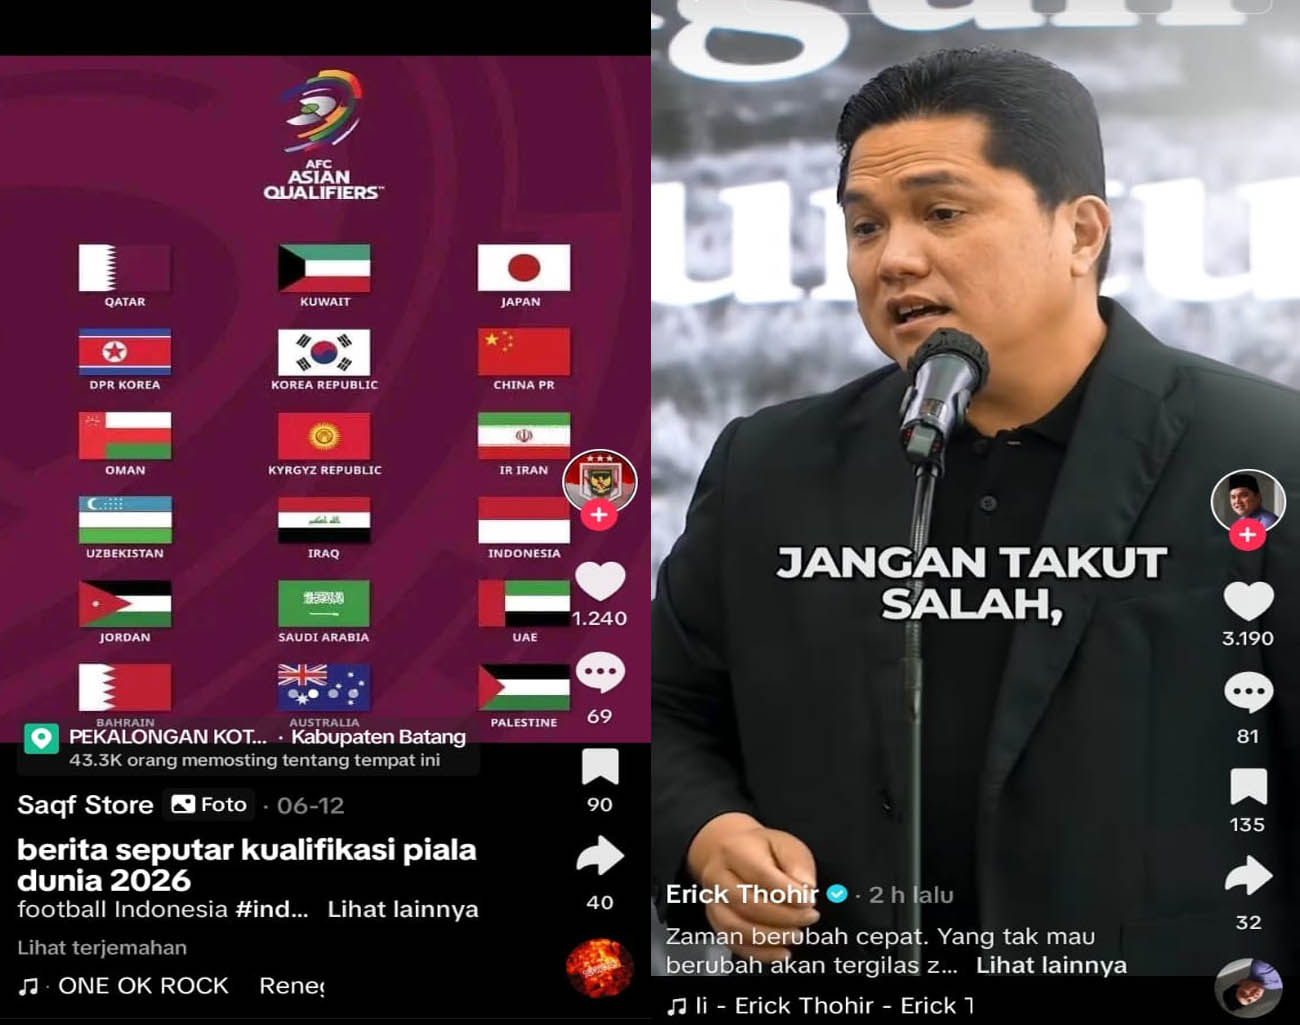 Harapan Erick Thohir Drawing Piala Dunia, Ketua PSSI ke Malaysia, Timnas Indonesia, Kualifikasi Piala Dunia